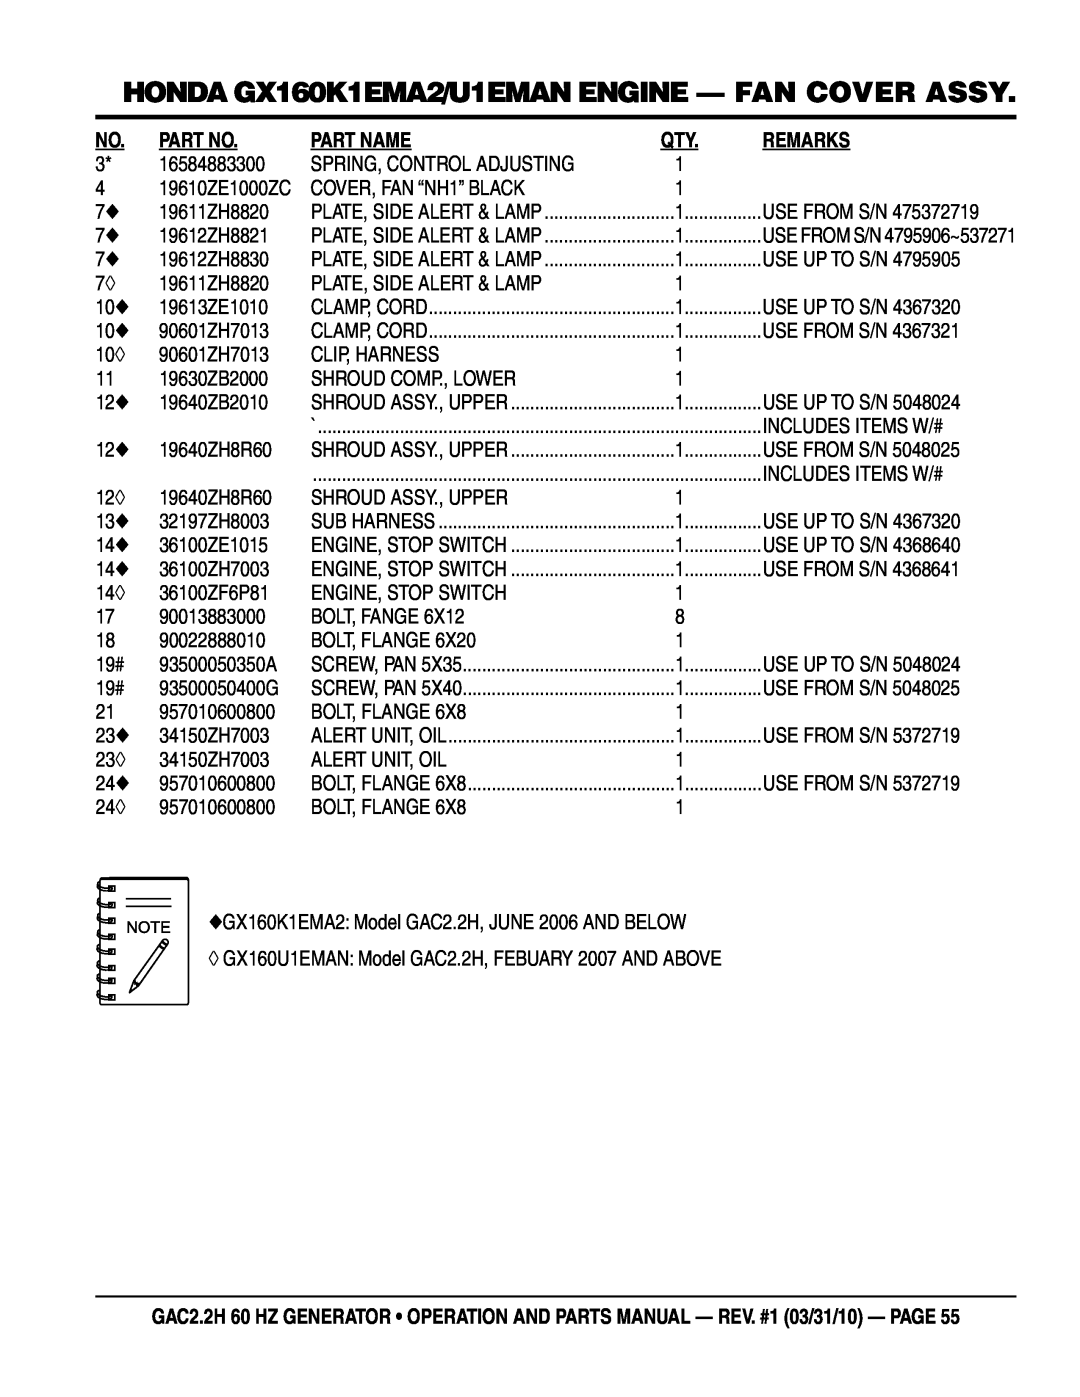 Multiquip GAC2.2H manual HONDA GX160K1EMA2/U1EMAN engine - FAN COVER assy, Part Name, Remarks, 16584883300 